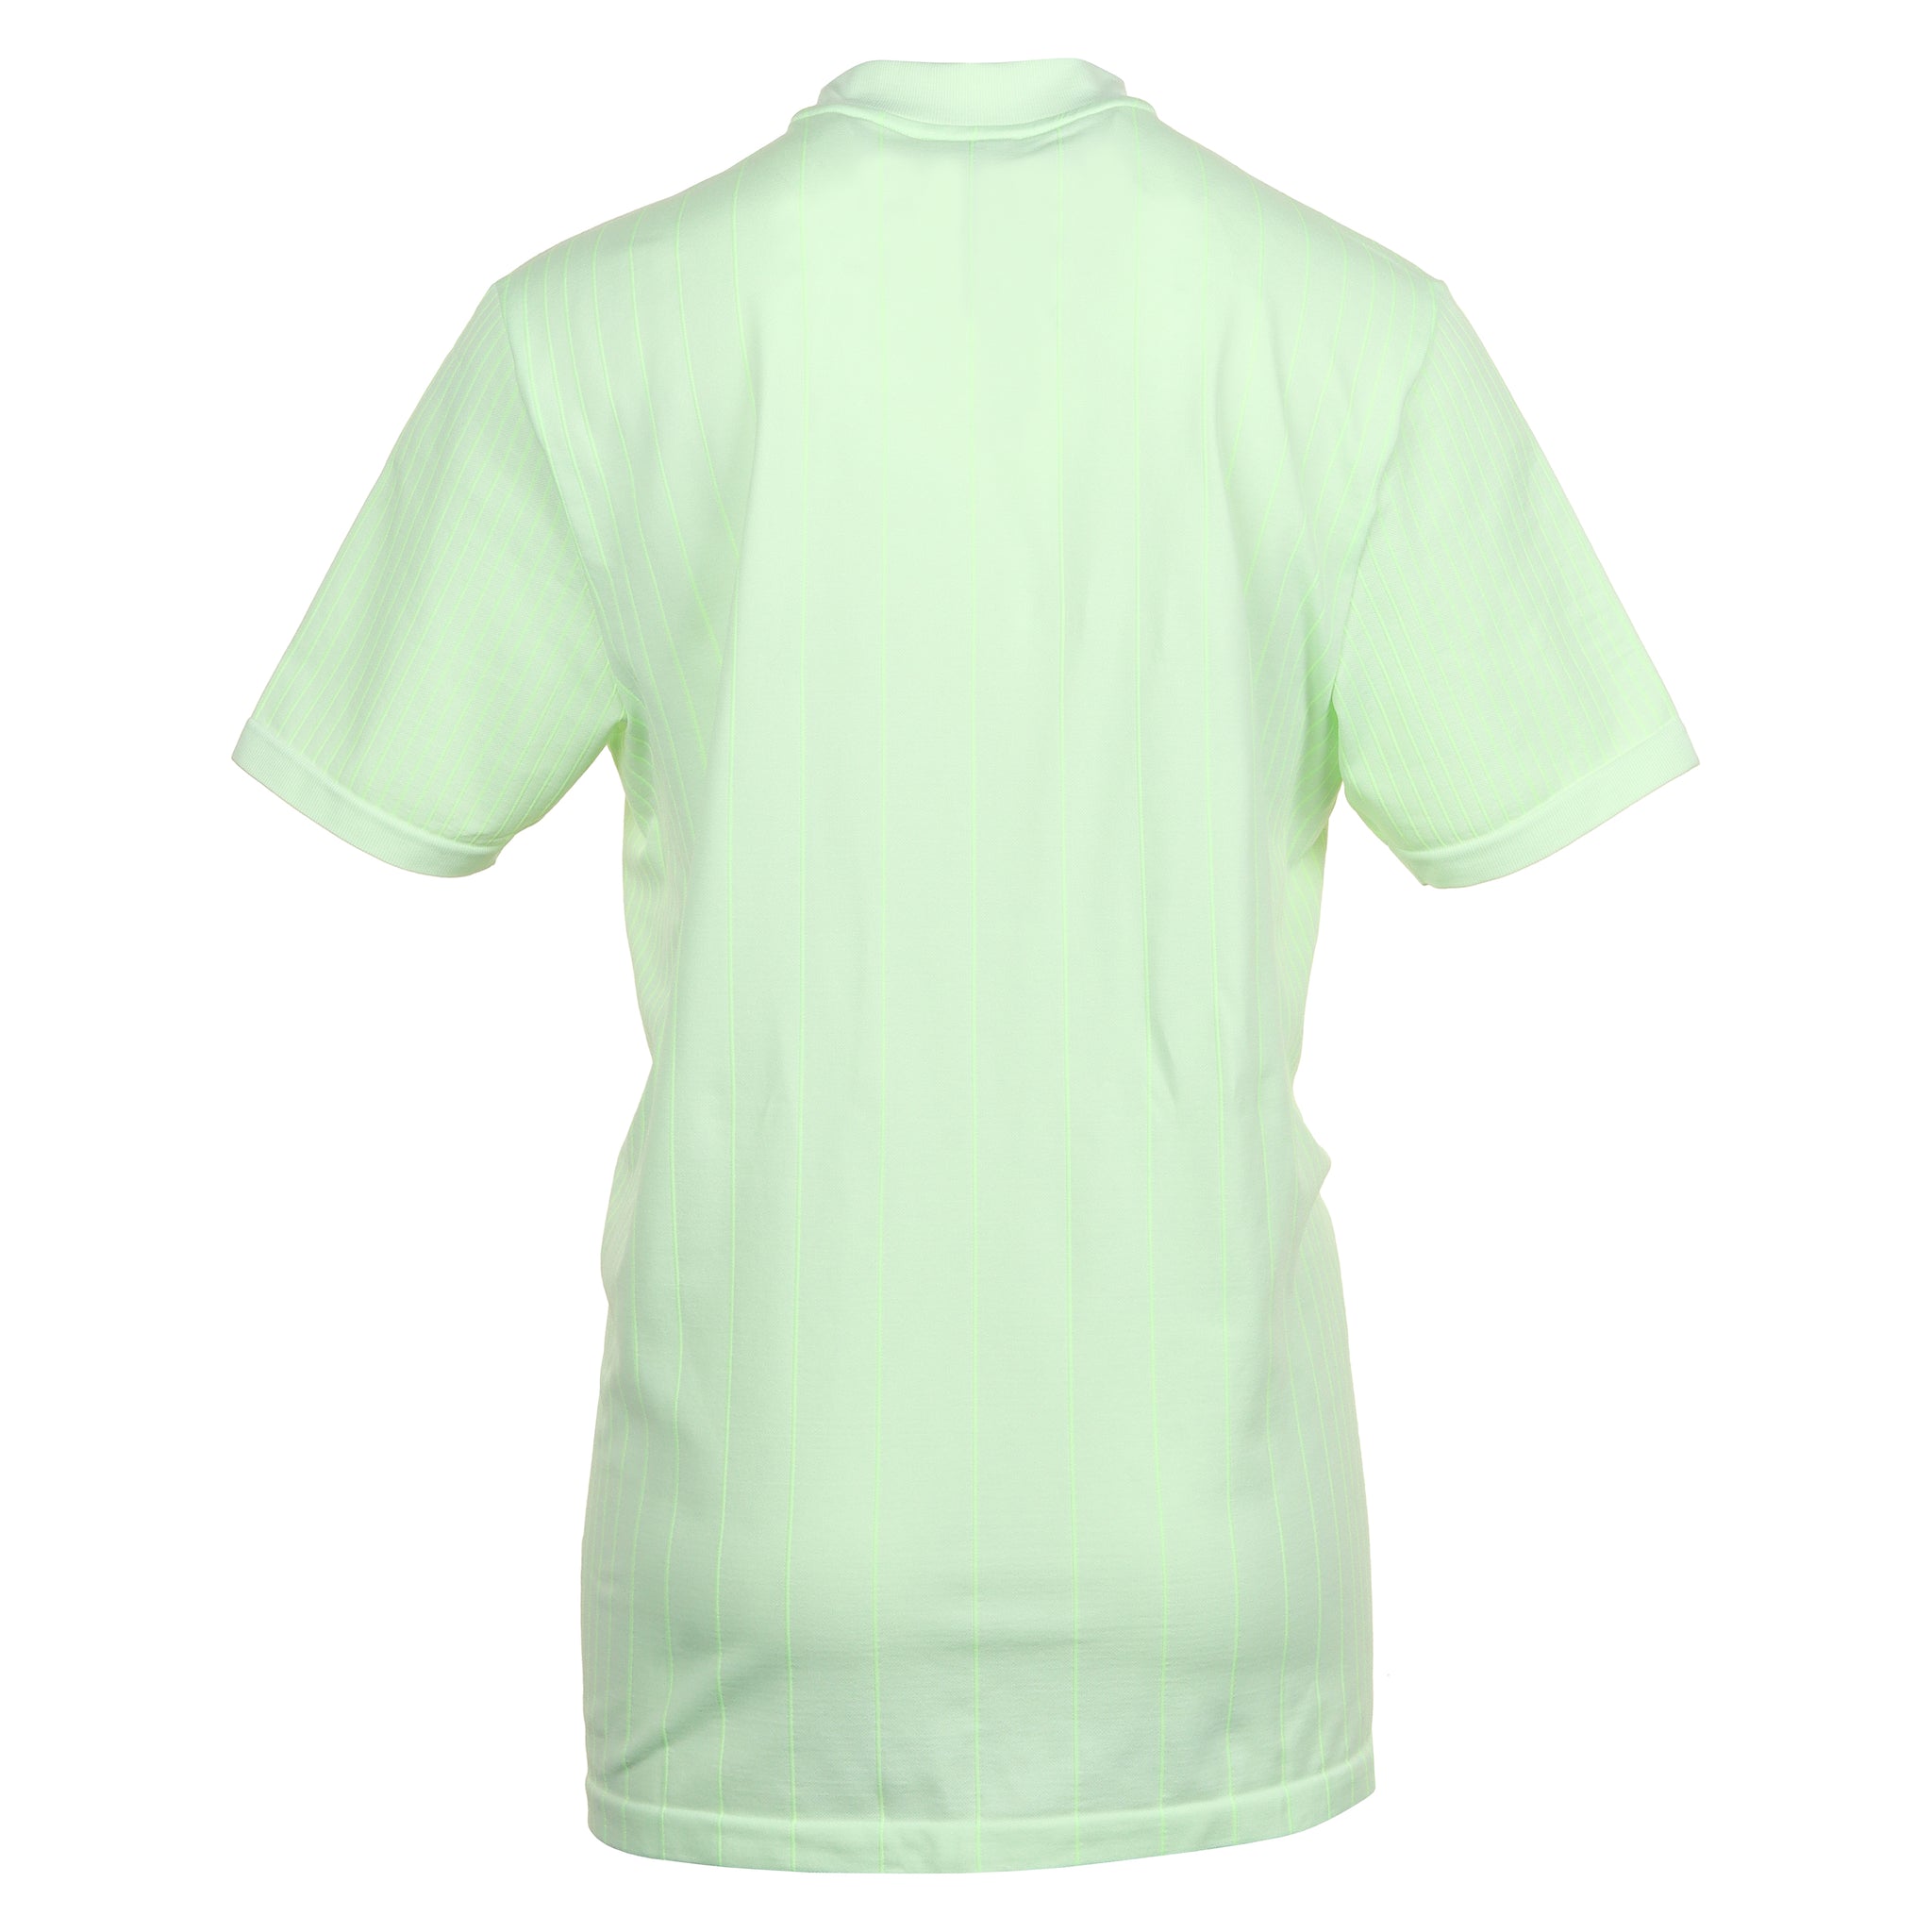 adidas-golf-ultimate365-tour-primeknit-shirt-iq2927-crystal-jade